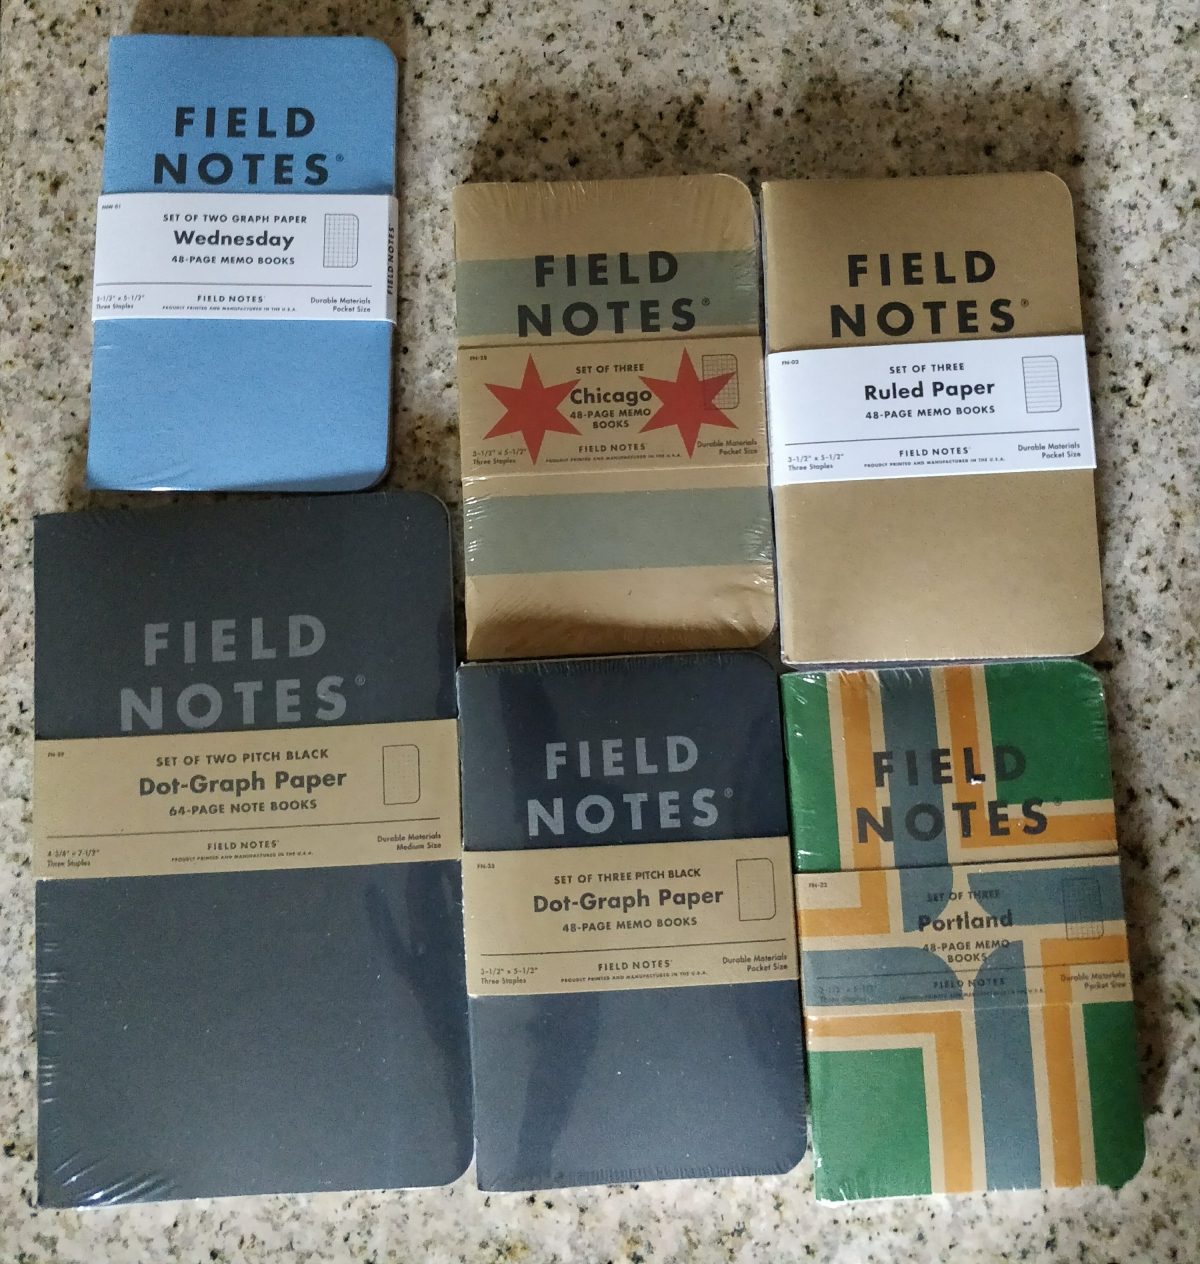 Field Notes brand pocket notebooks